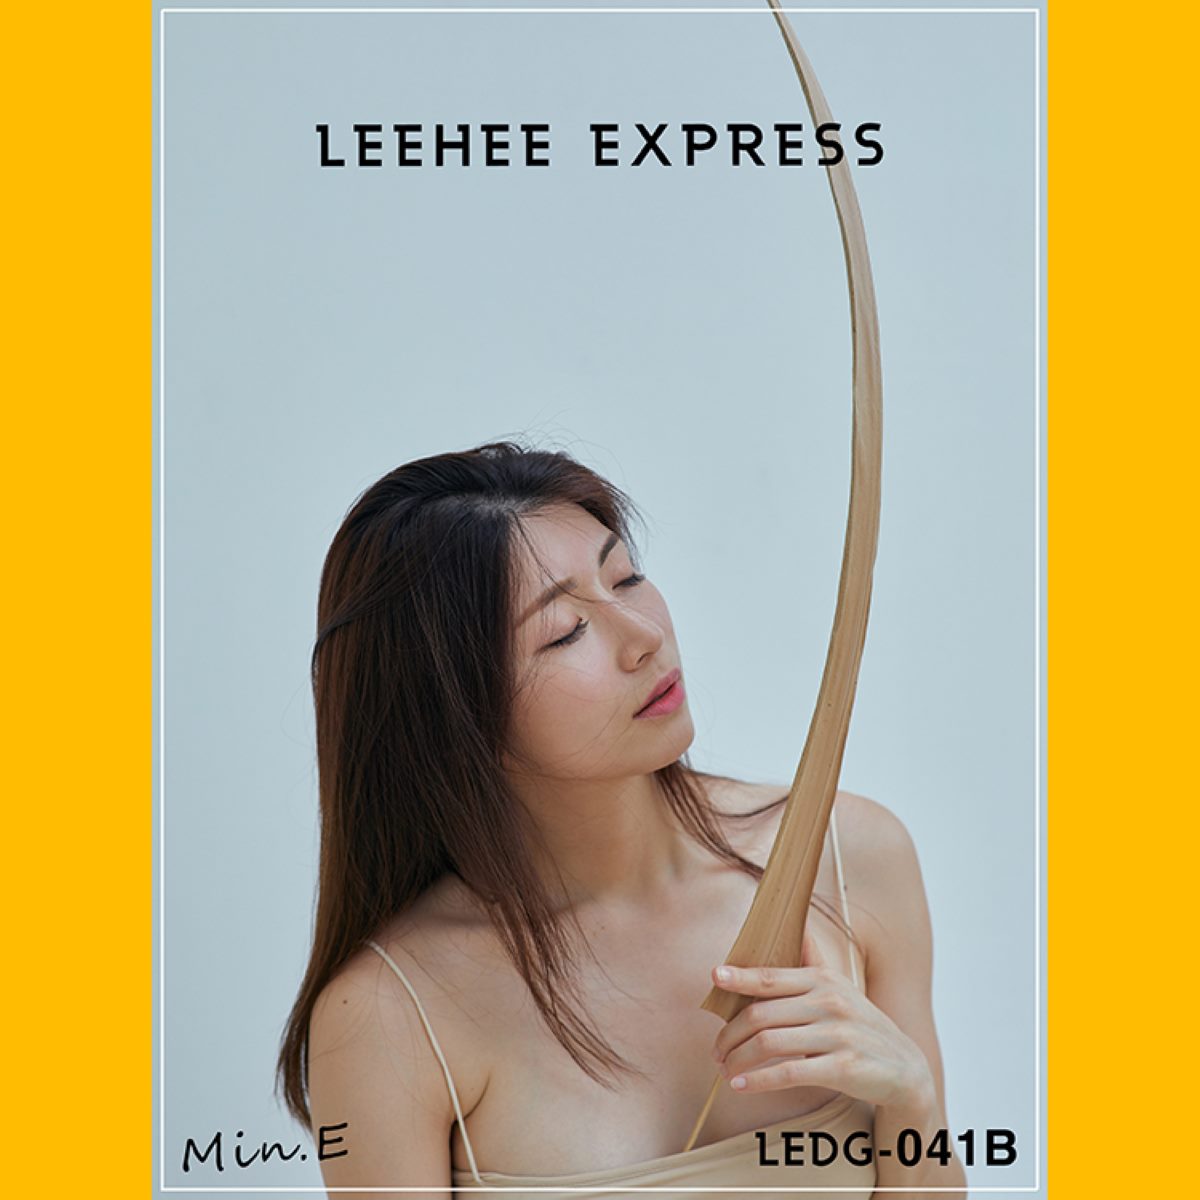 LEEHEE EXPRESS LEDG 041B Min E 50 9144465682.jpg